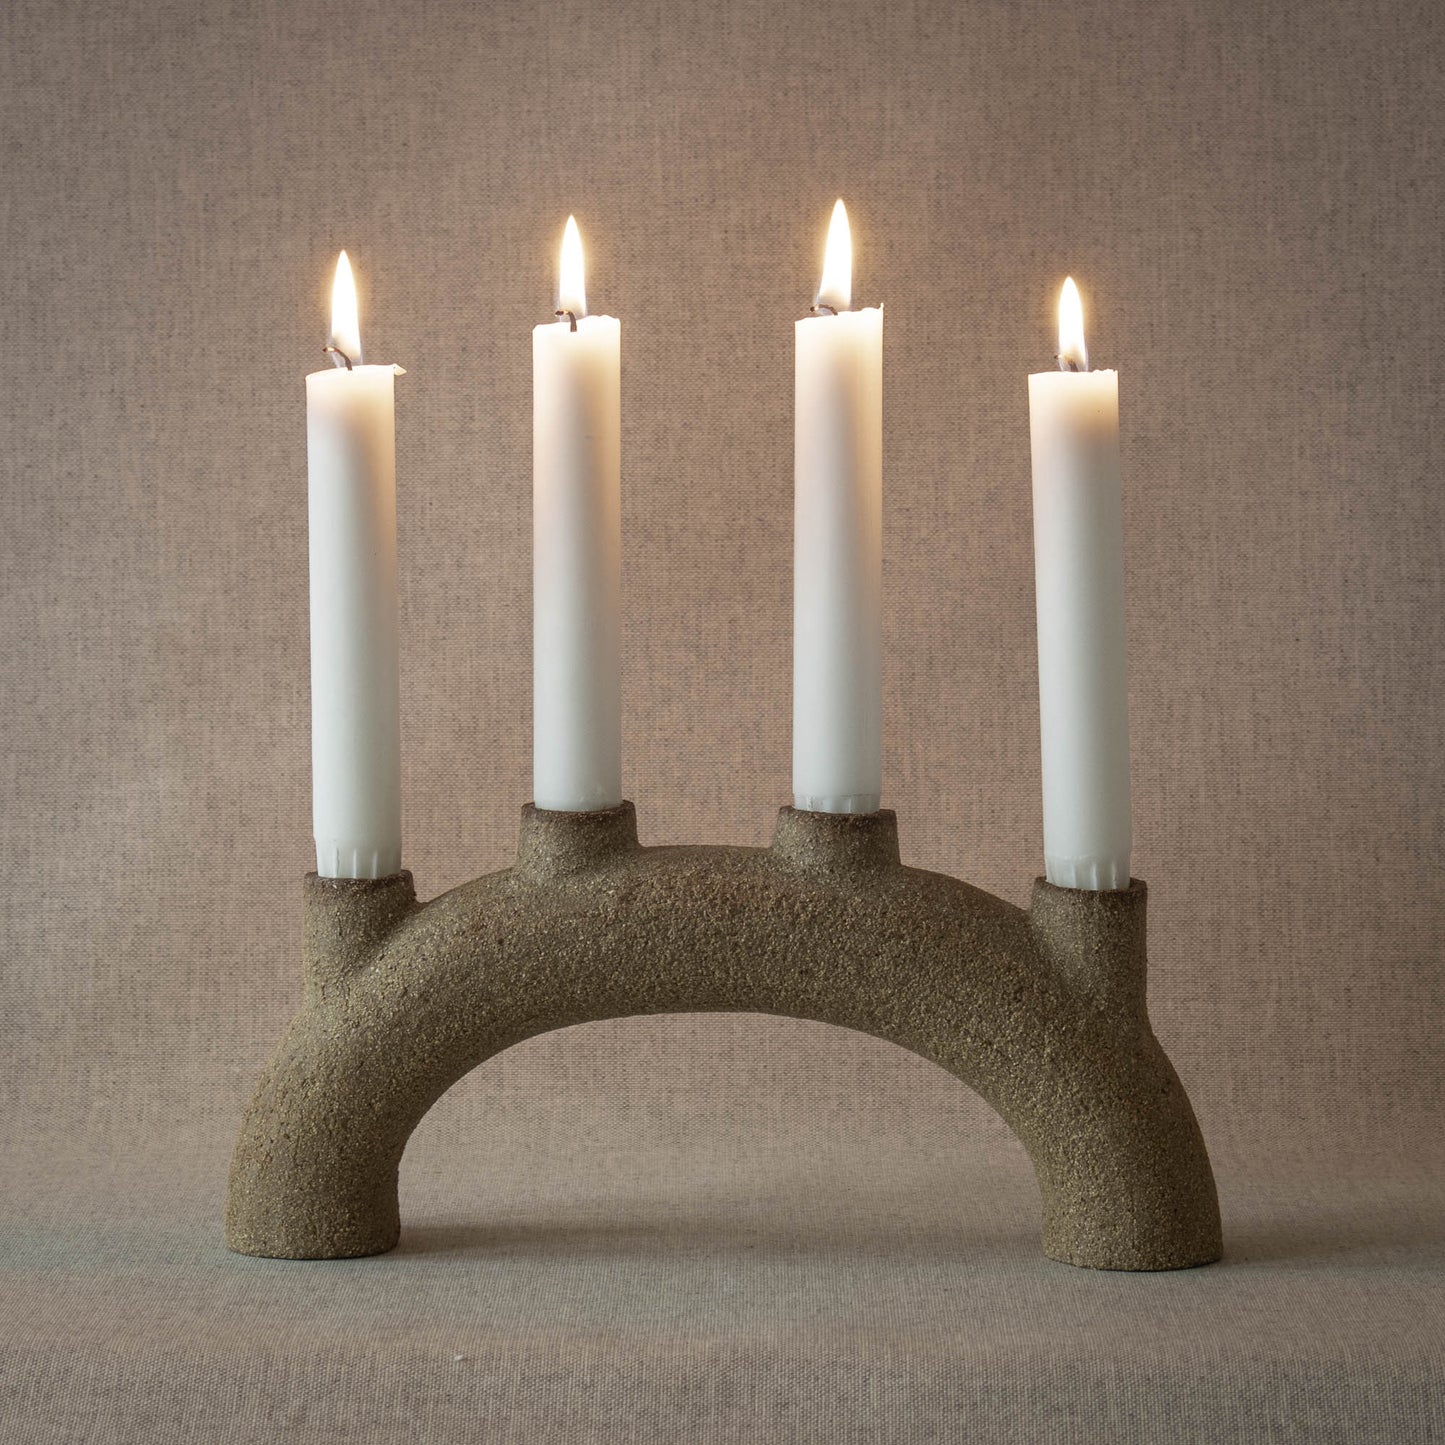 Candlestick Arc, 4 candles - Advent candlestick